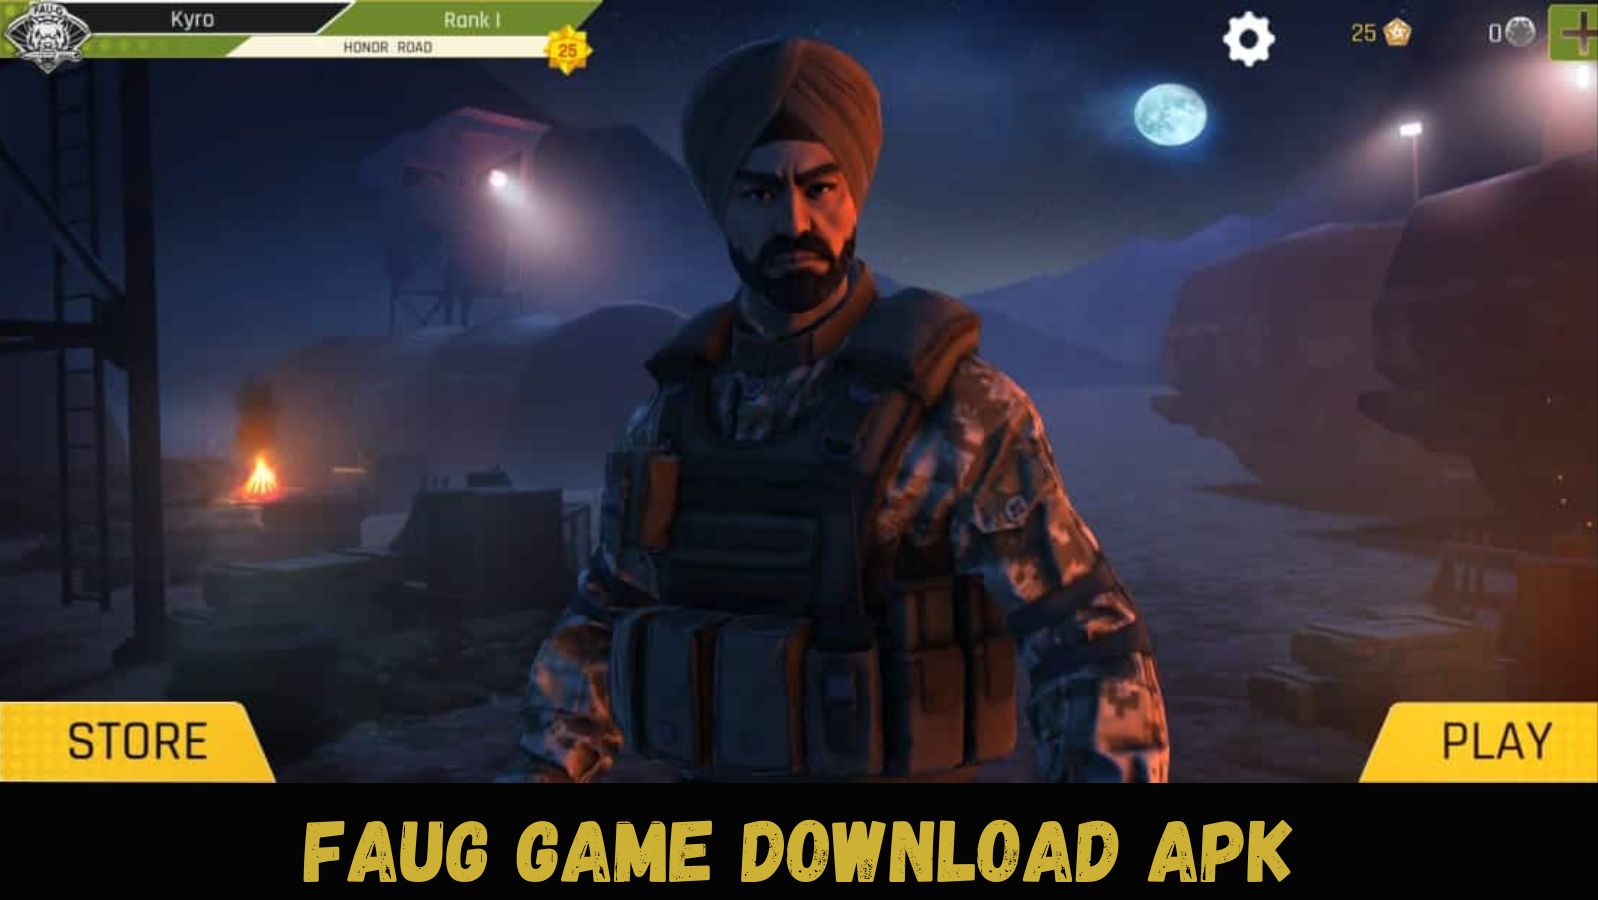 Faug Game Download Apk